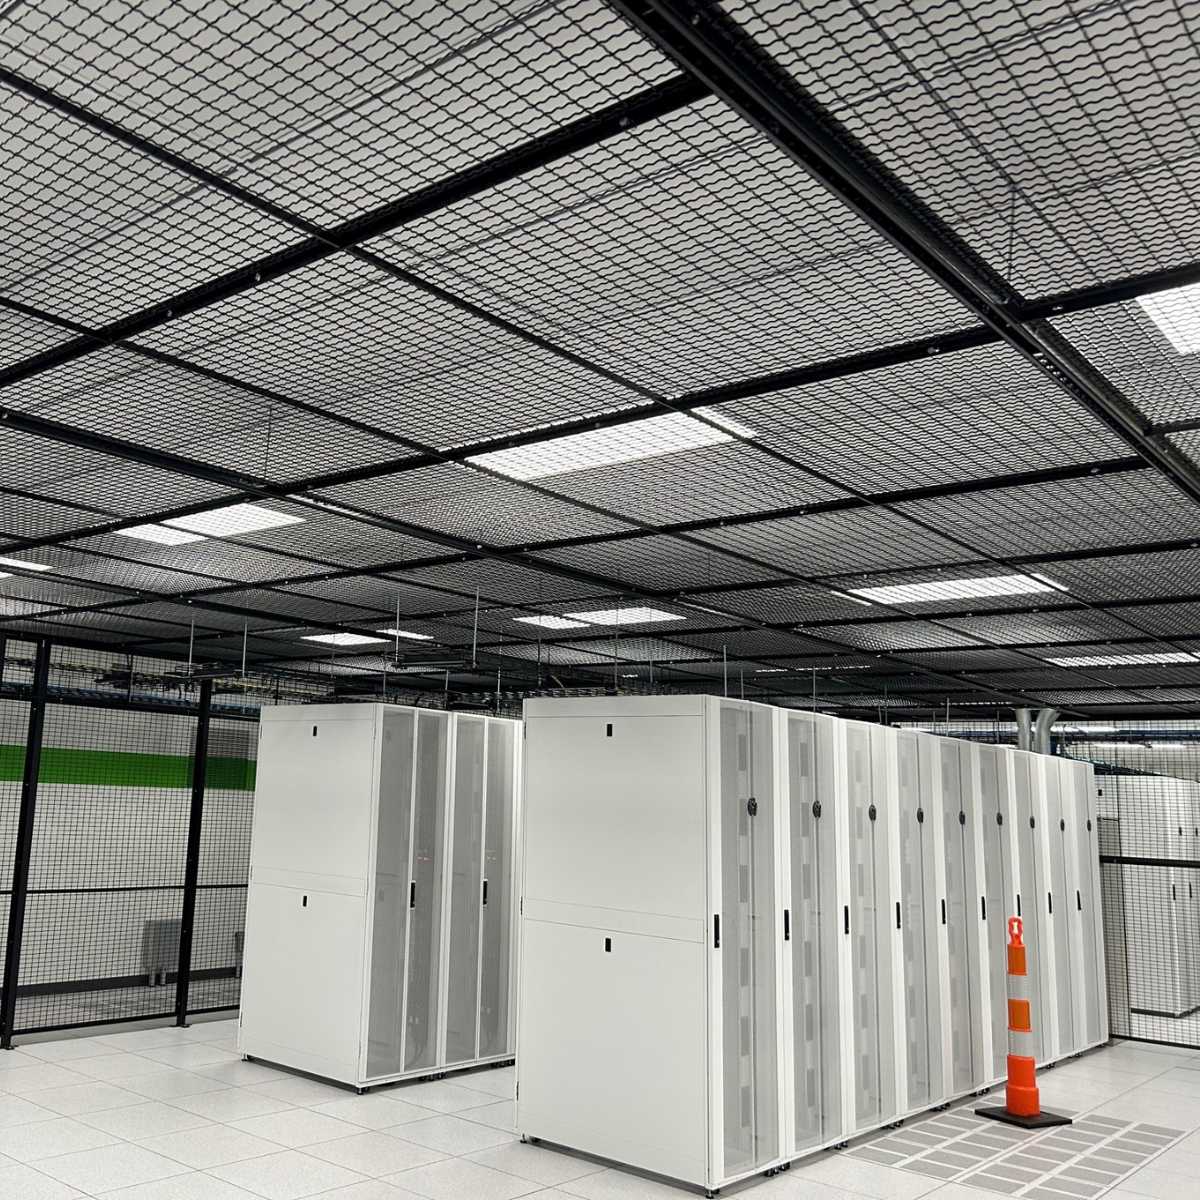 server racks inside black mesh cage with ceiling